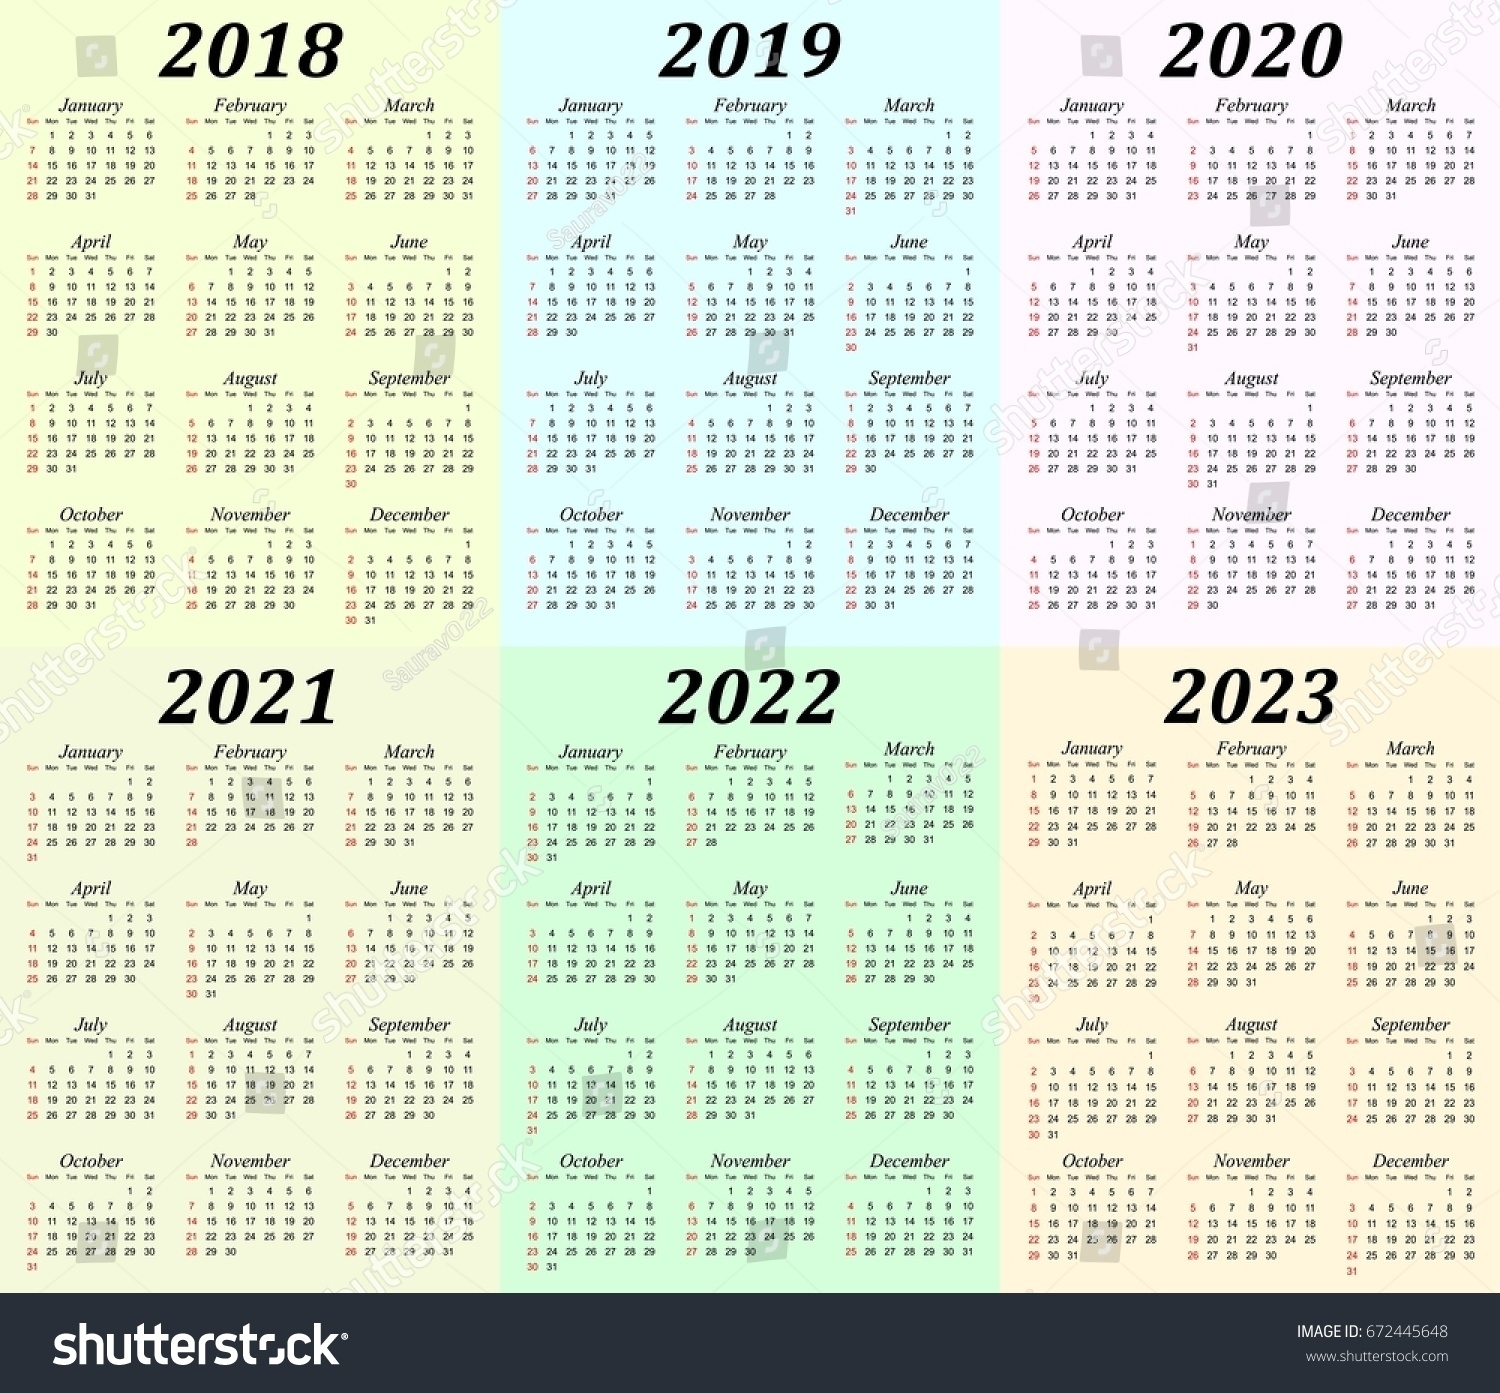 6 Year Calendar 2019 To 2023 | Ten Free Printable Calendar 2019-2020 Free 5 Year Calendar Template